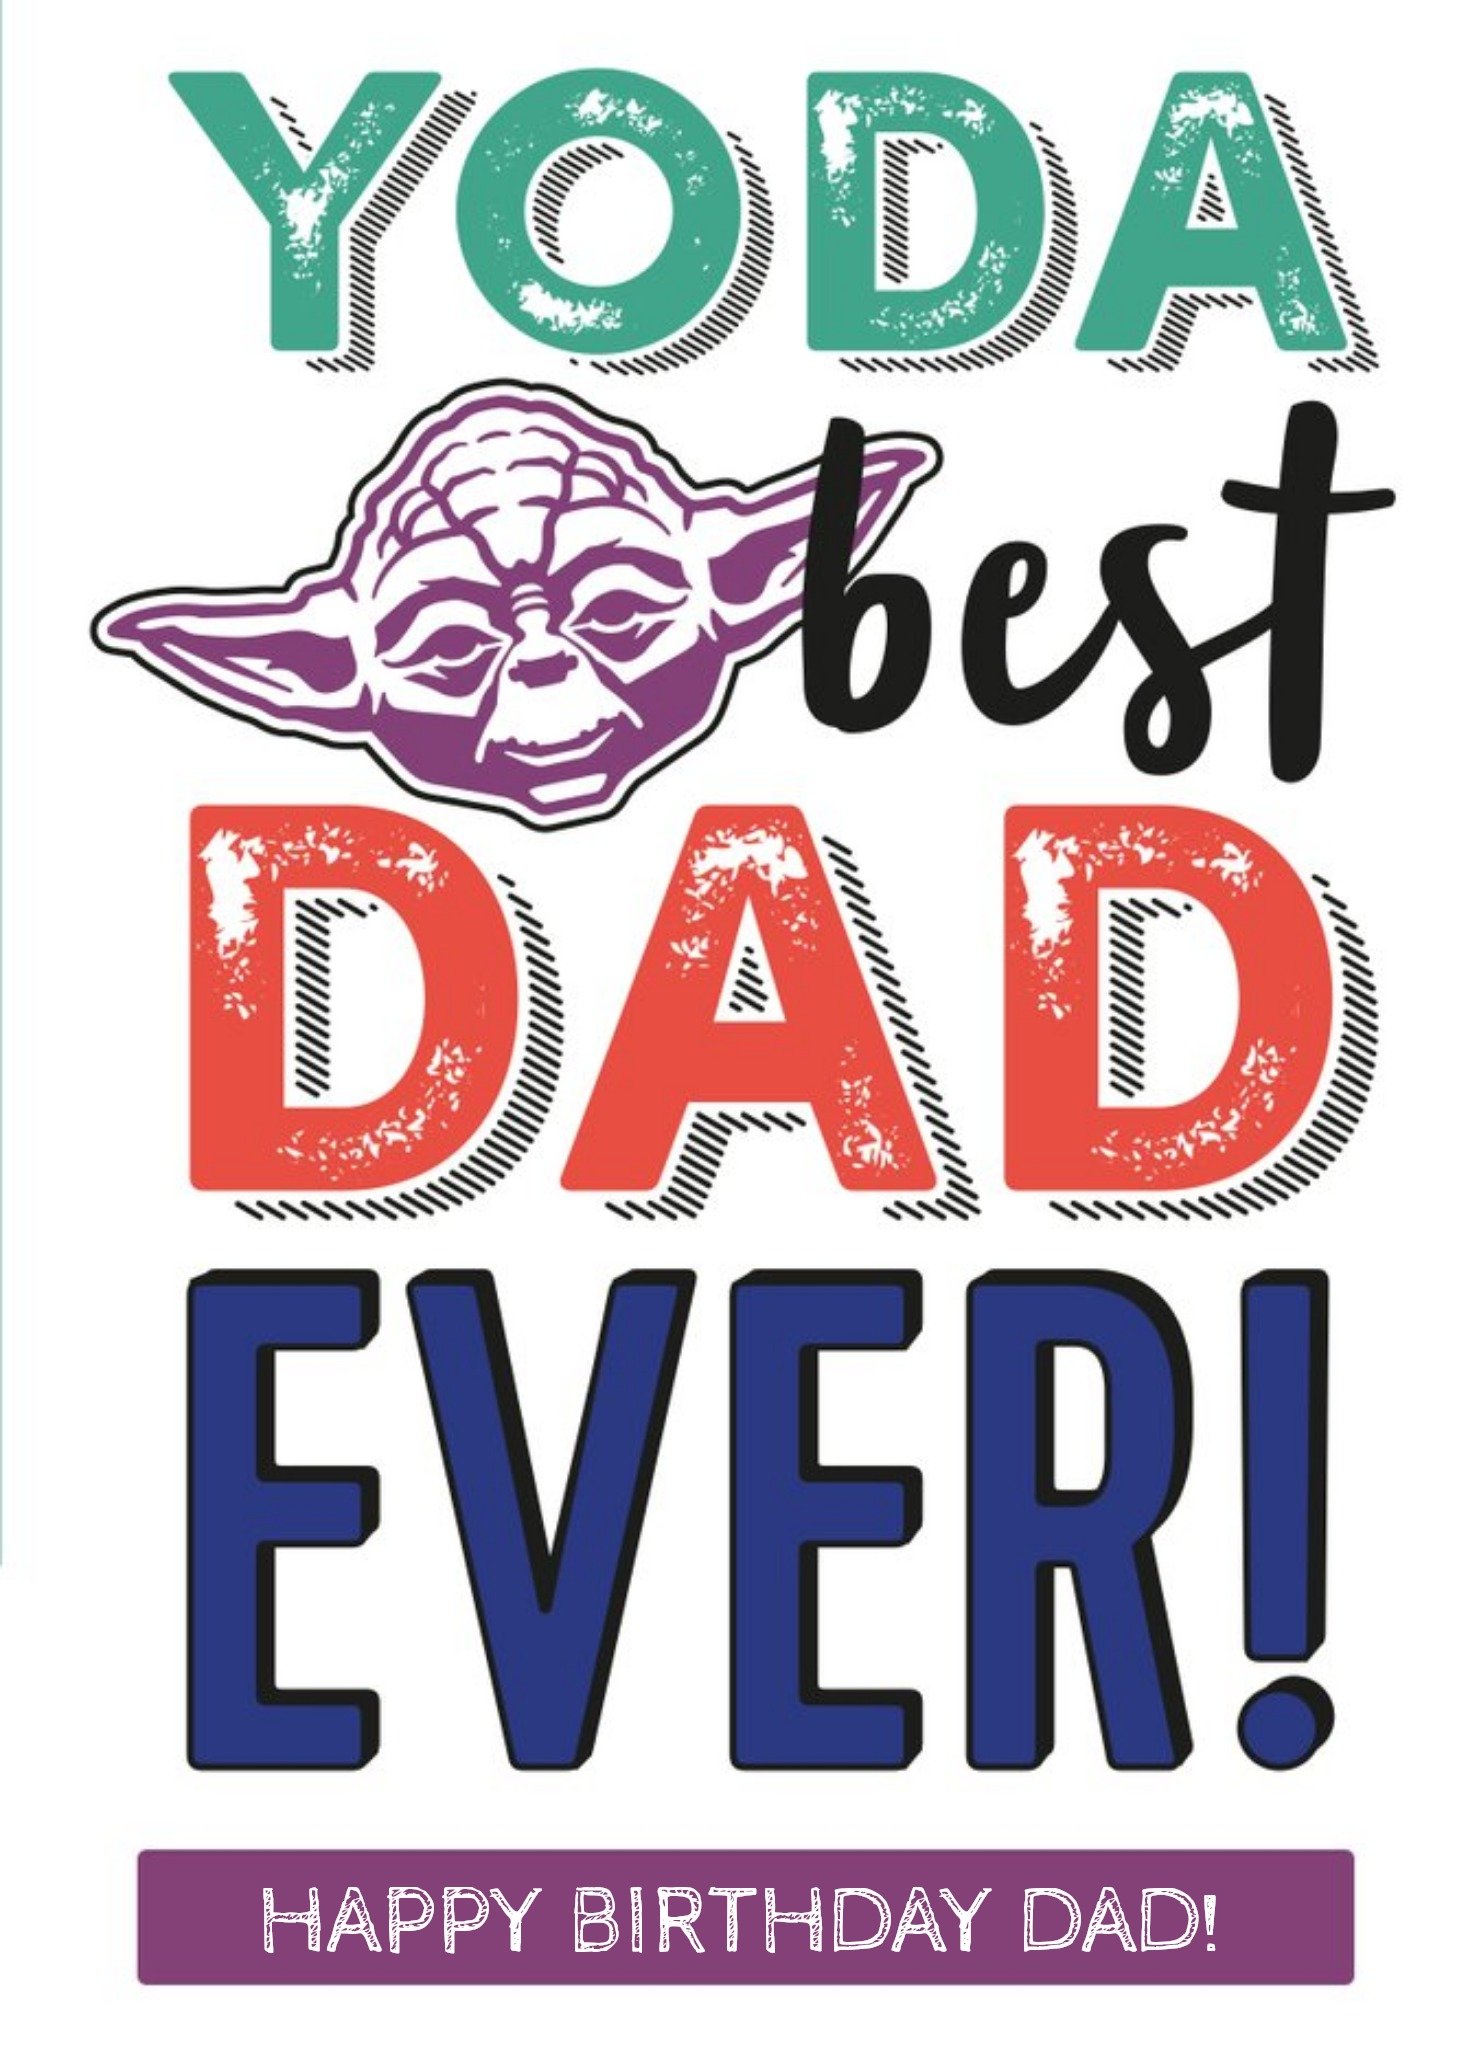 Dad Birthday Card - Star Wars - Yoda Ecard